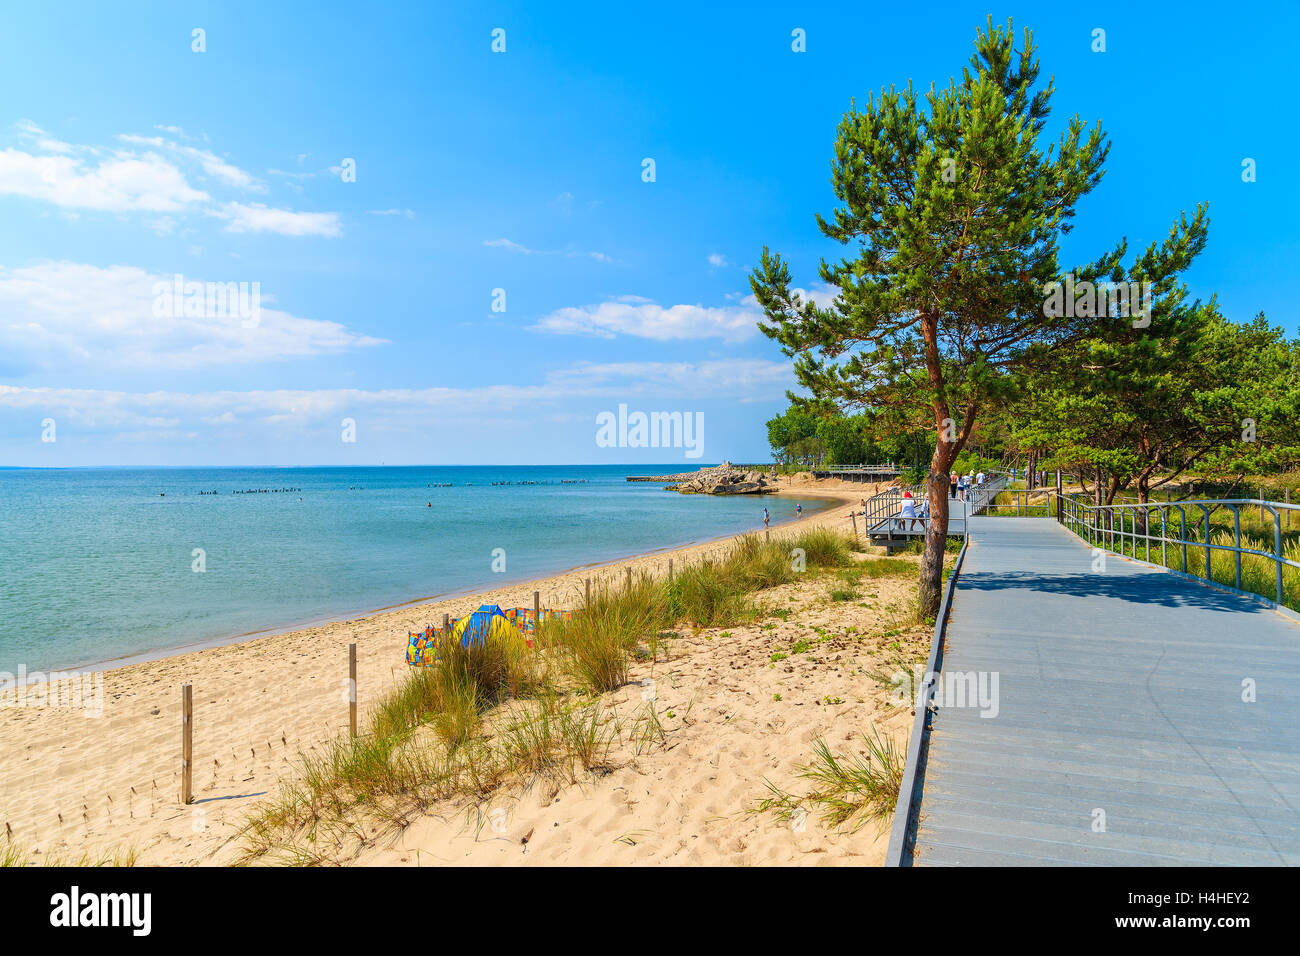 Coastal promenade along beach in Pucka bay on Hel peninsula, Baltic Sea, Poland Stock Photo